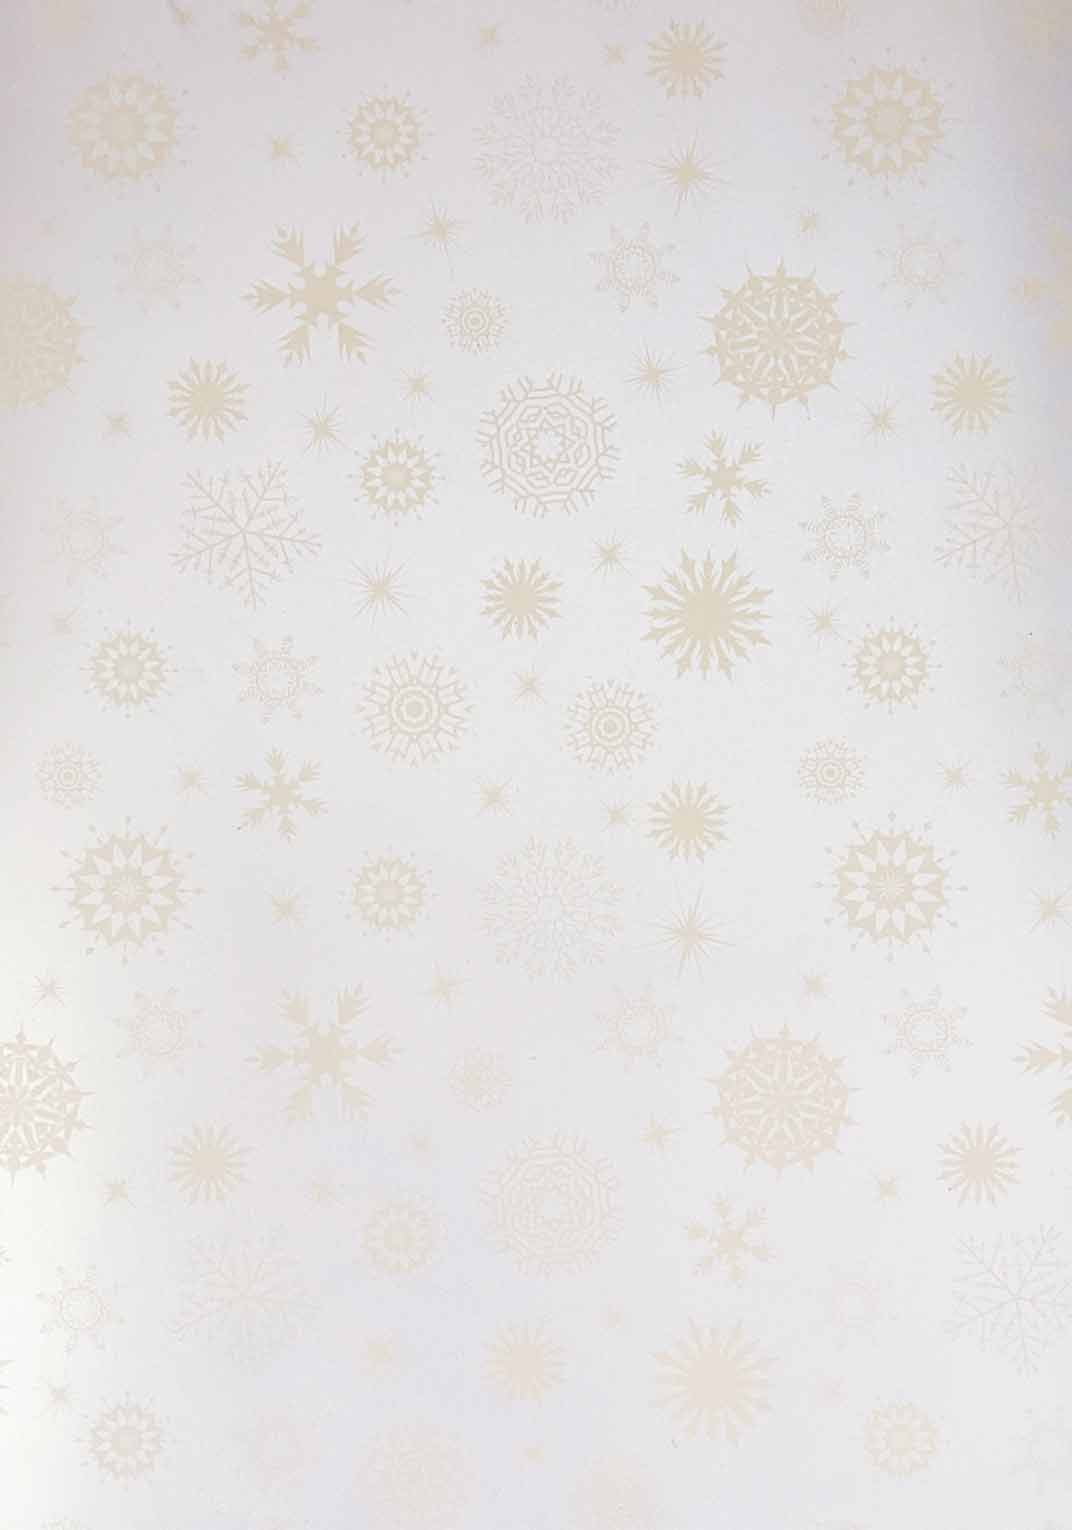 ice-maiden-white-snowflake-pattern-paper